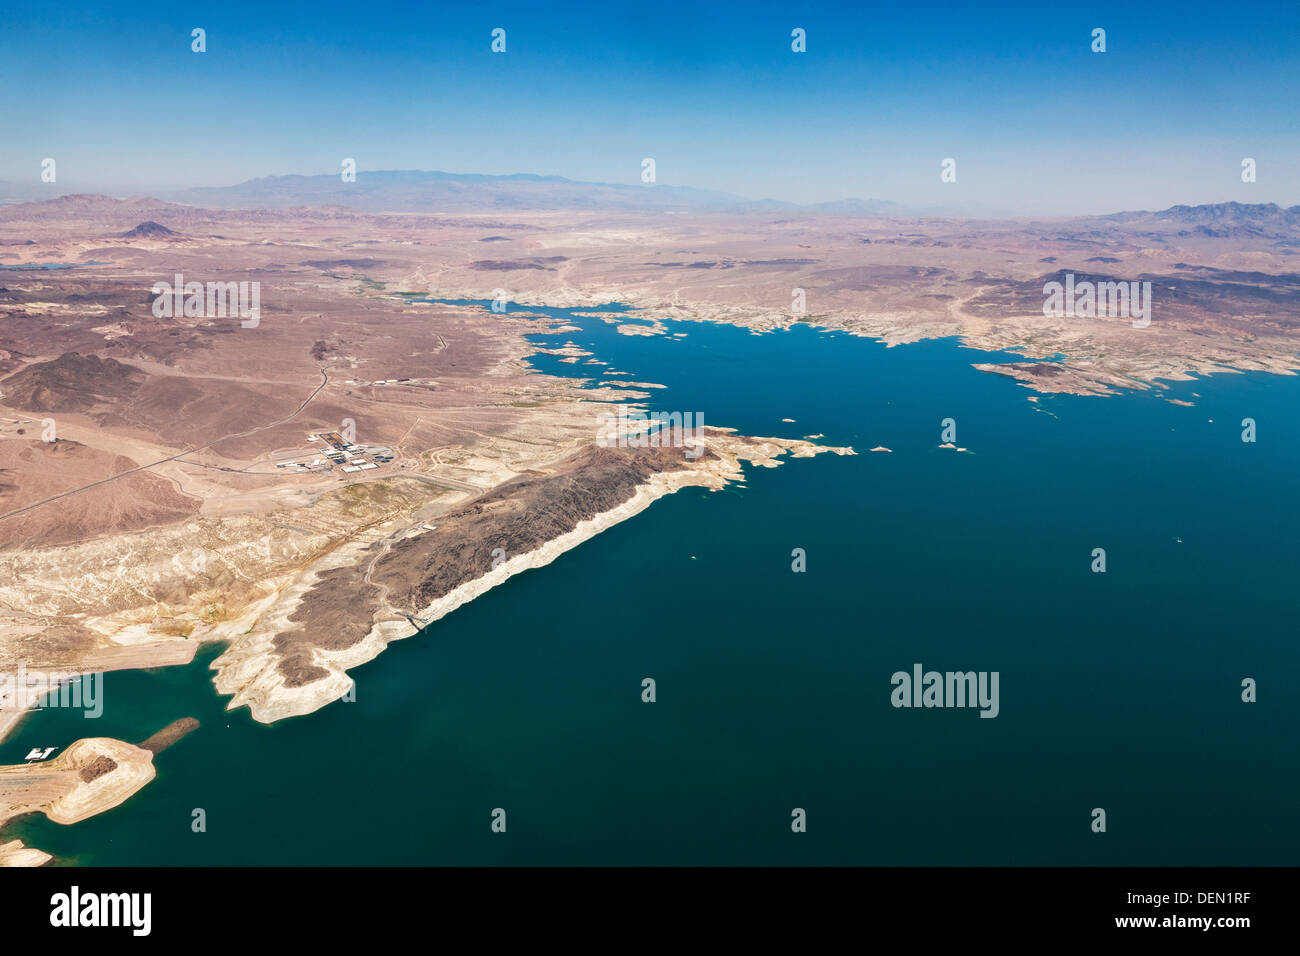 Il lago Mead Nevada e Arizona USA dall'aria. JMH5484 Foto Stock